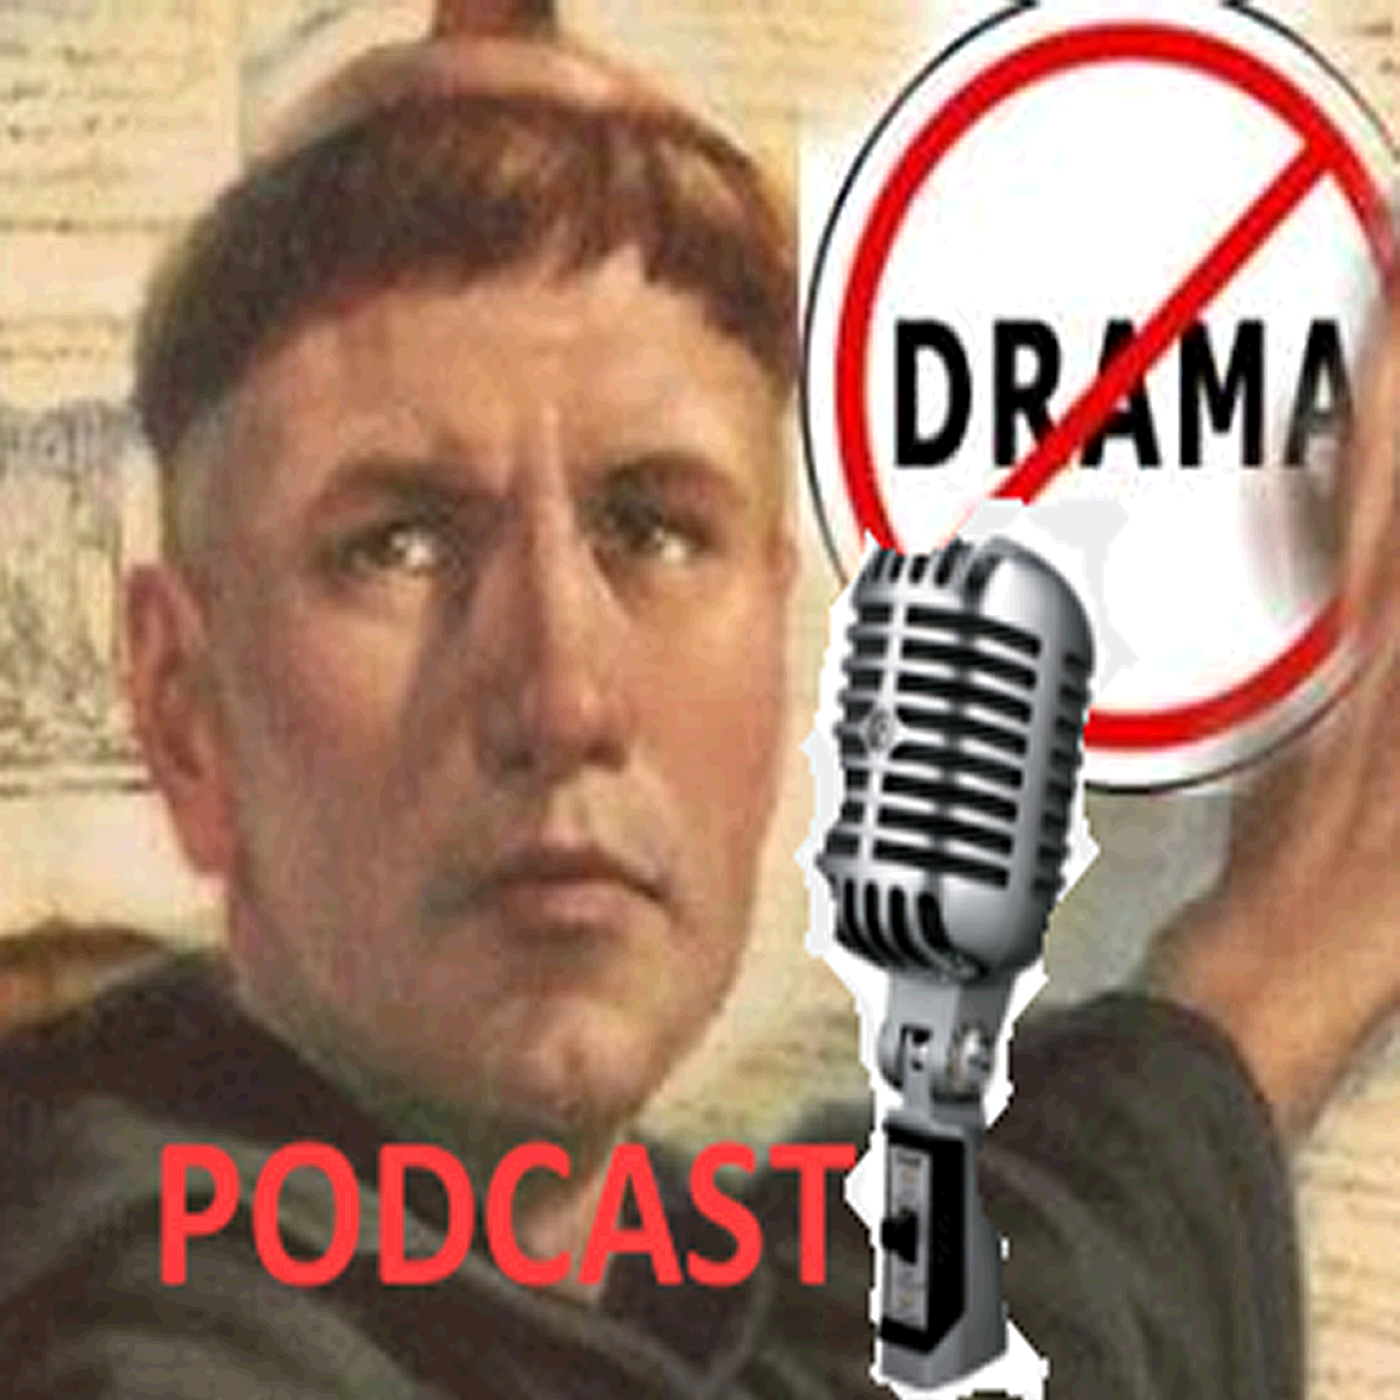 NO DRAMA Podcast - Episode 15: Romans 11:25-36